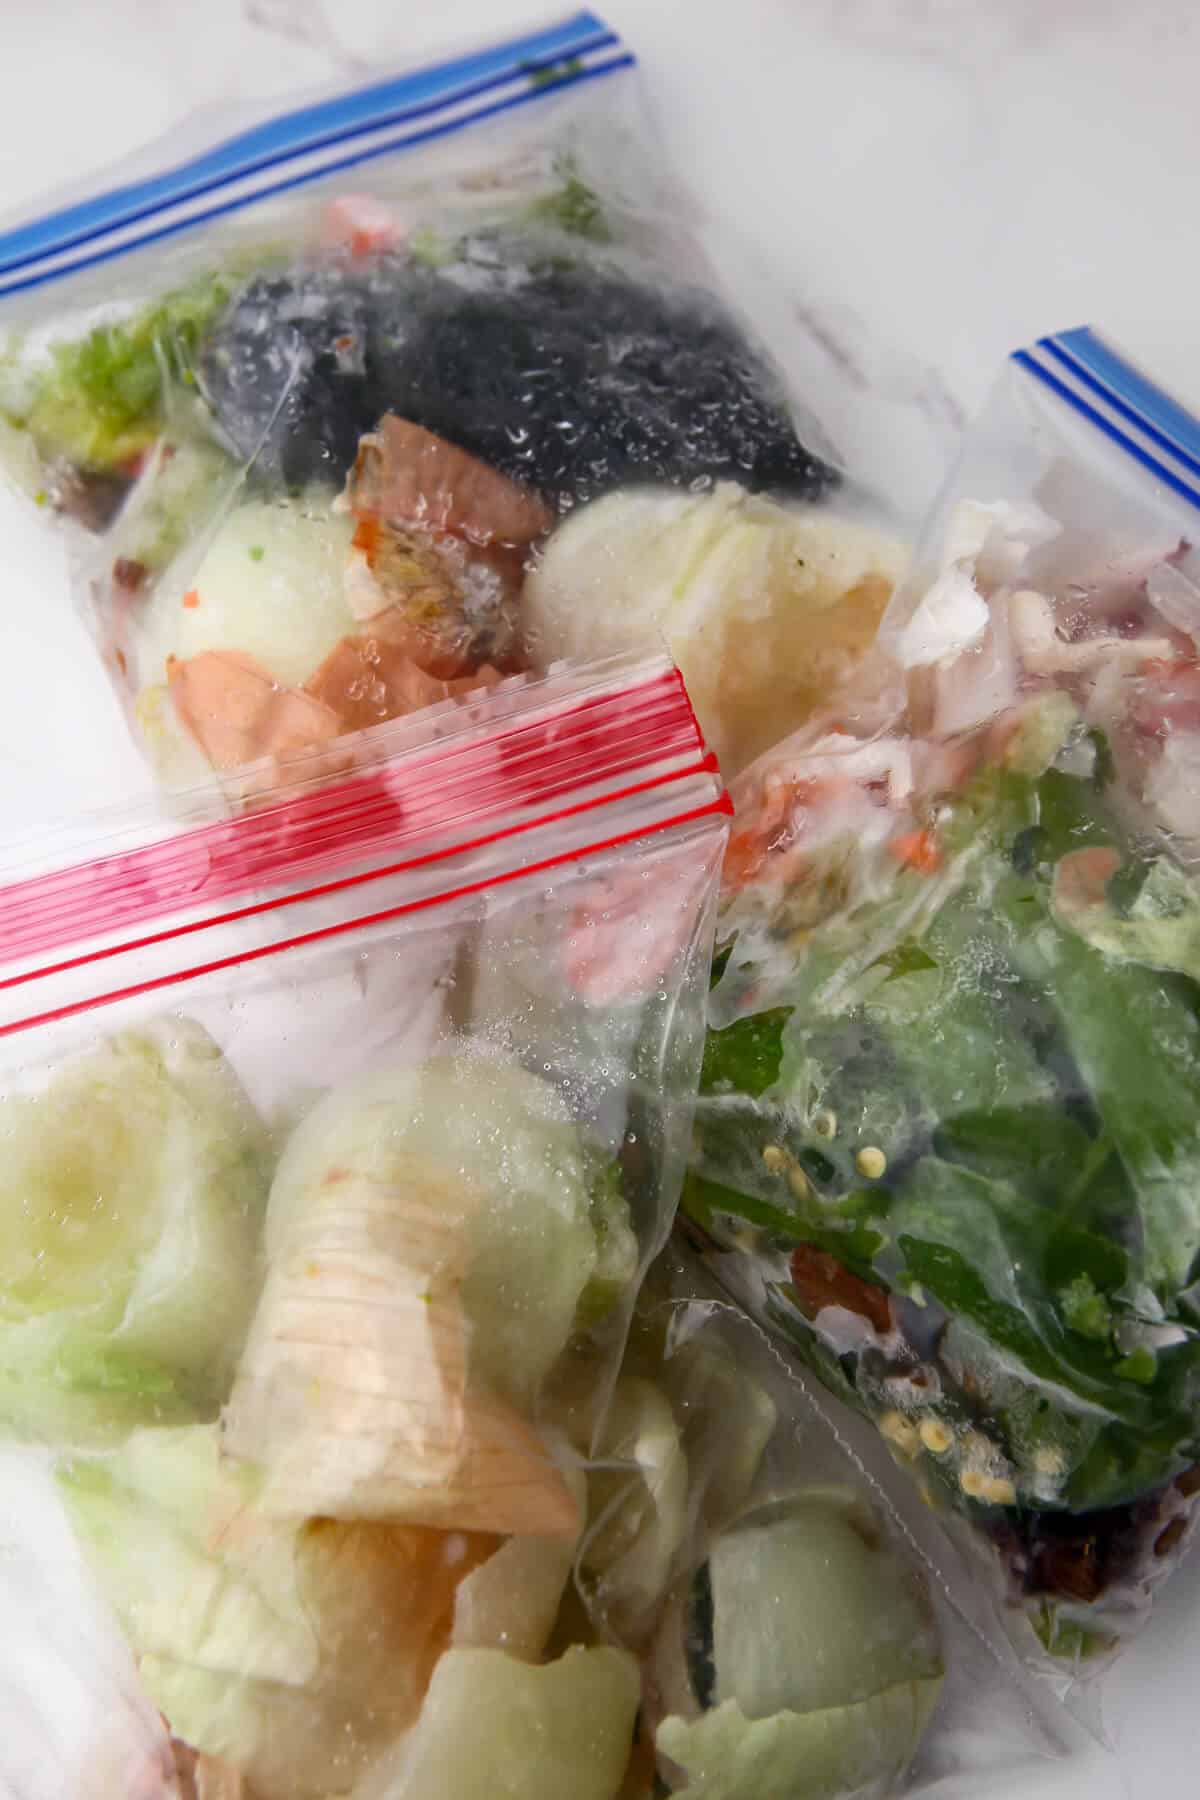 Freezer bags full of vegetable scraps to make broth.